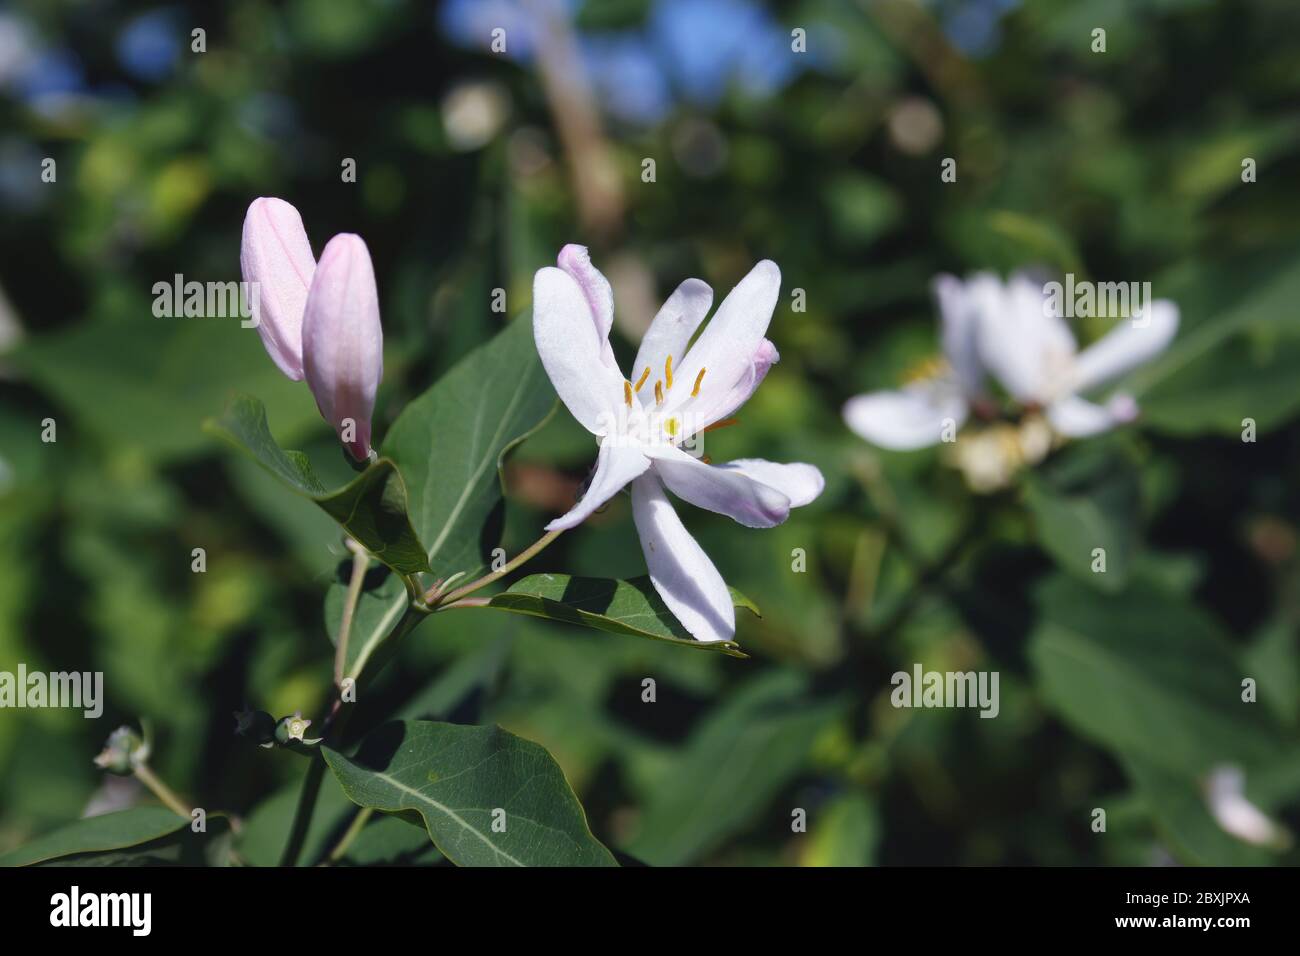 Frangula alnus flowering bush, blooming white flower close up detail, dark green leaves blurry background. Stock Photo